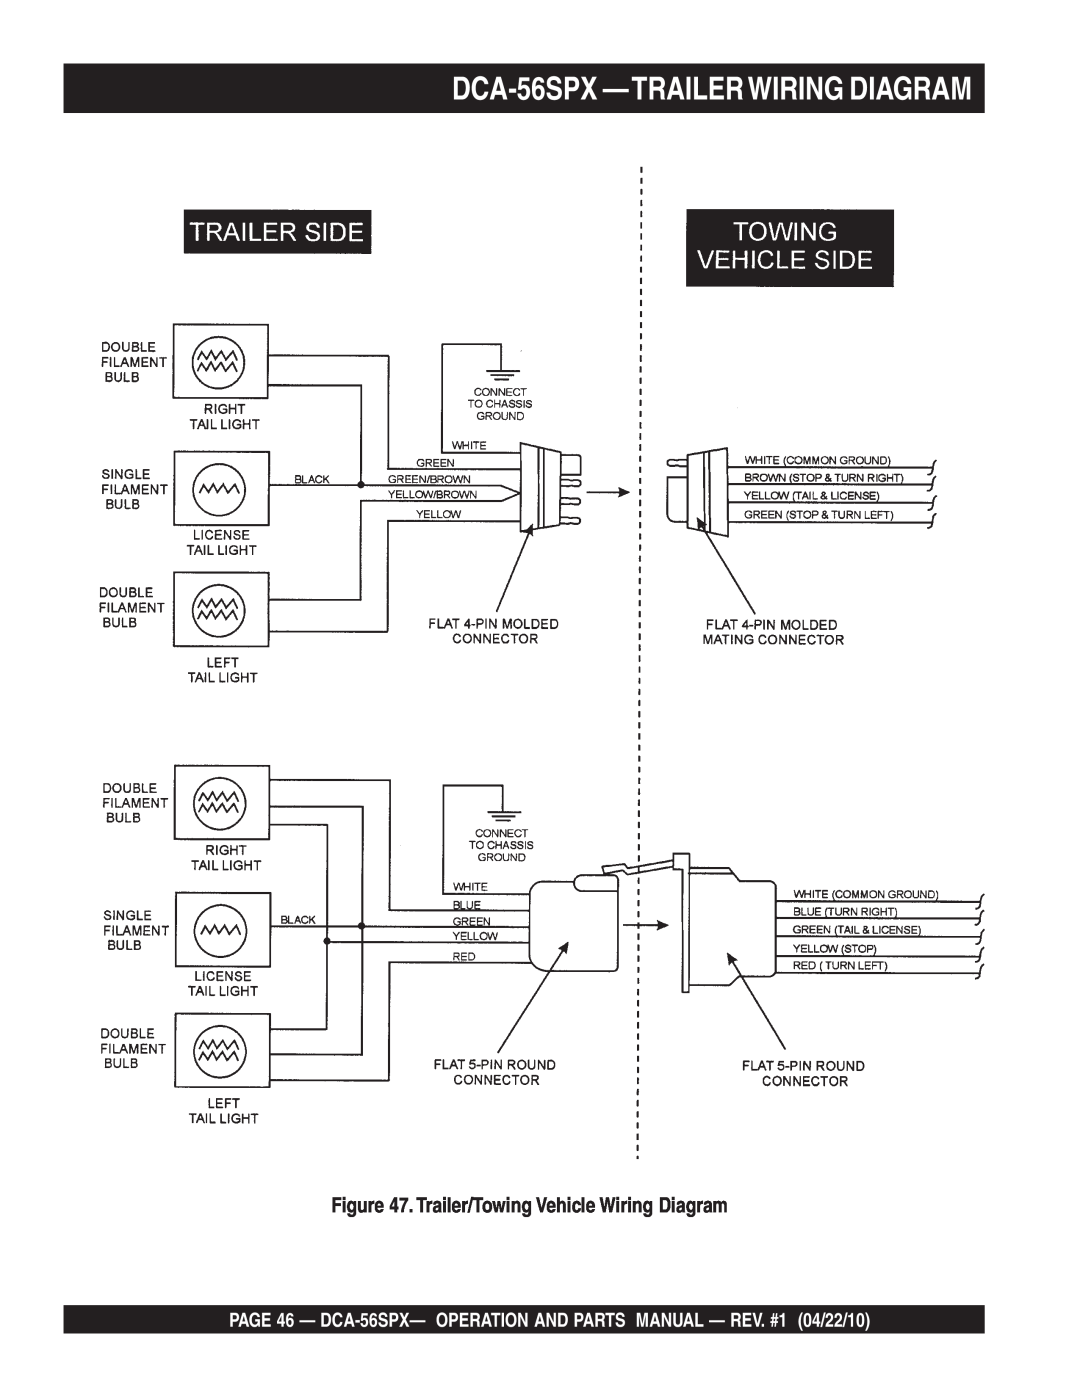 Multiquip operation manual DCA-56SPX -TRAILERWIRINGDIAGRAM, Trailer/Towing Vehicle Wiring Diagram 